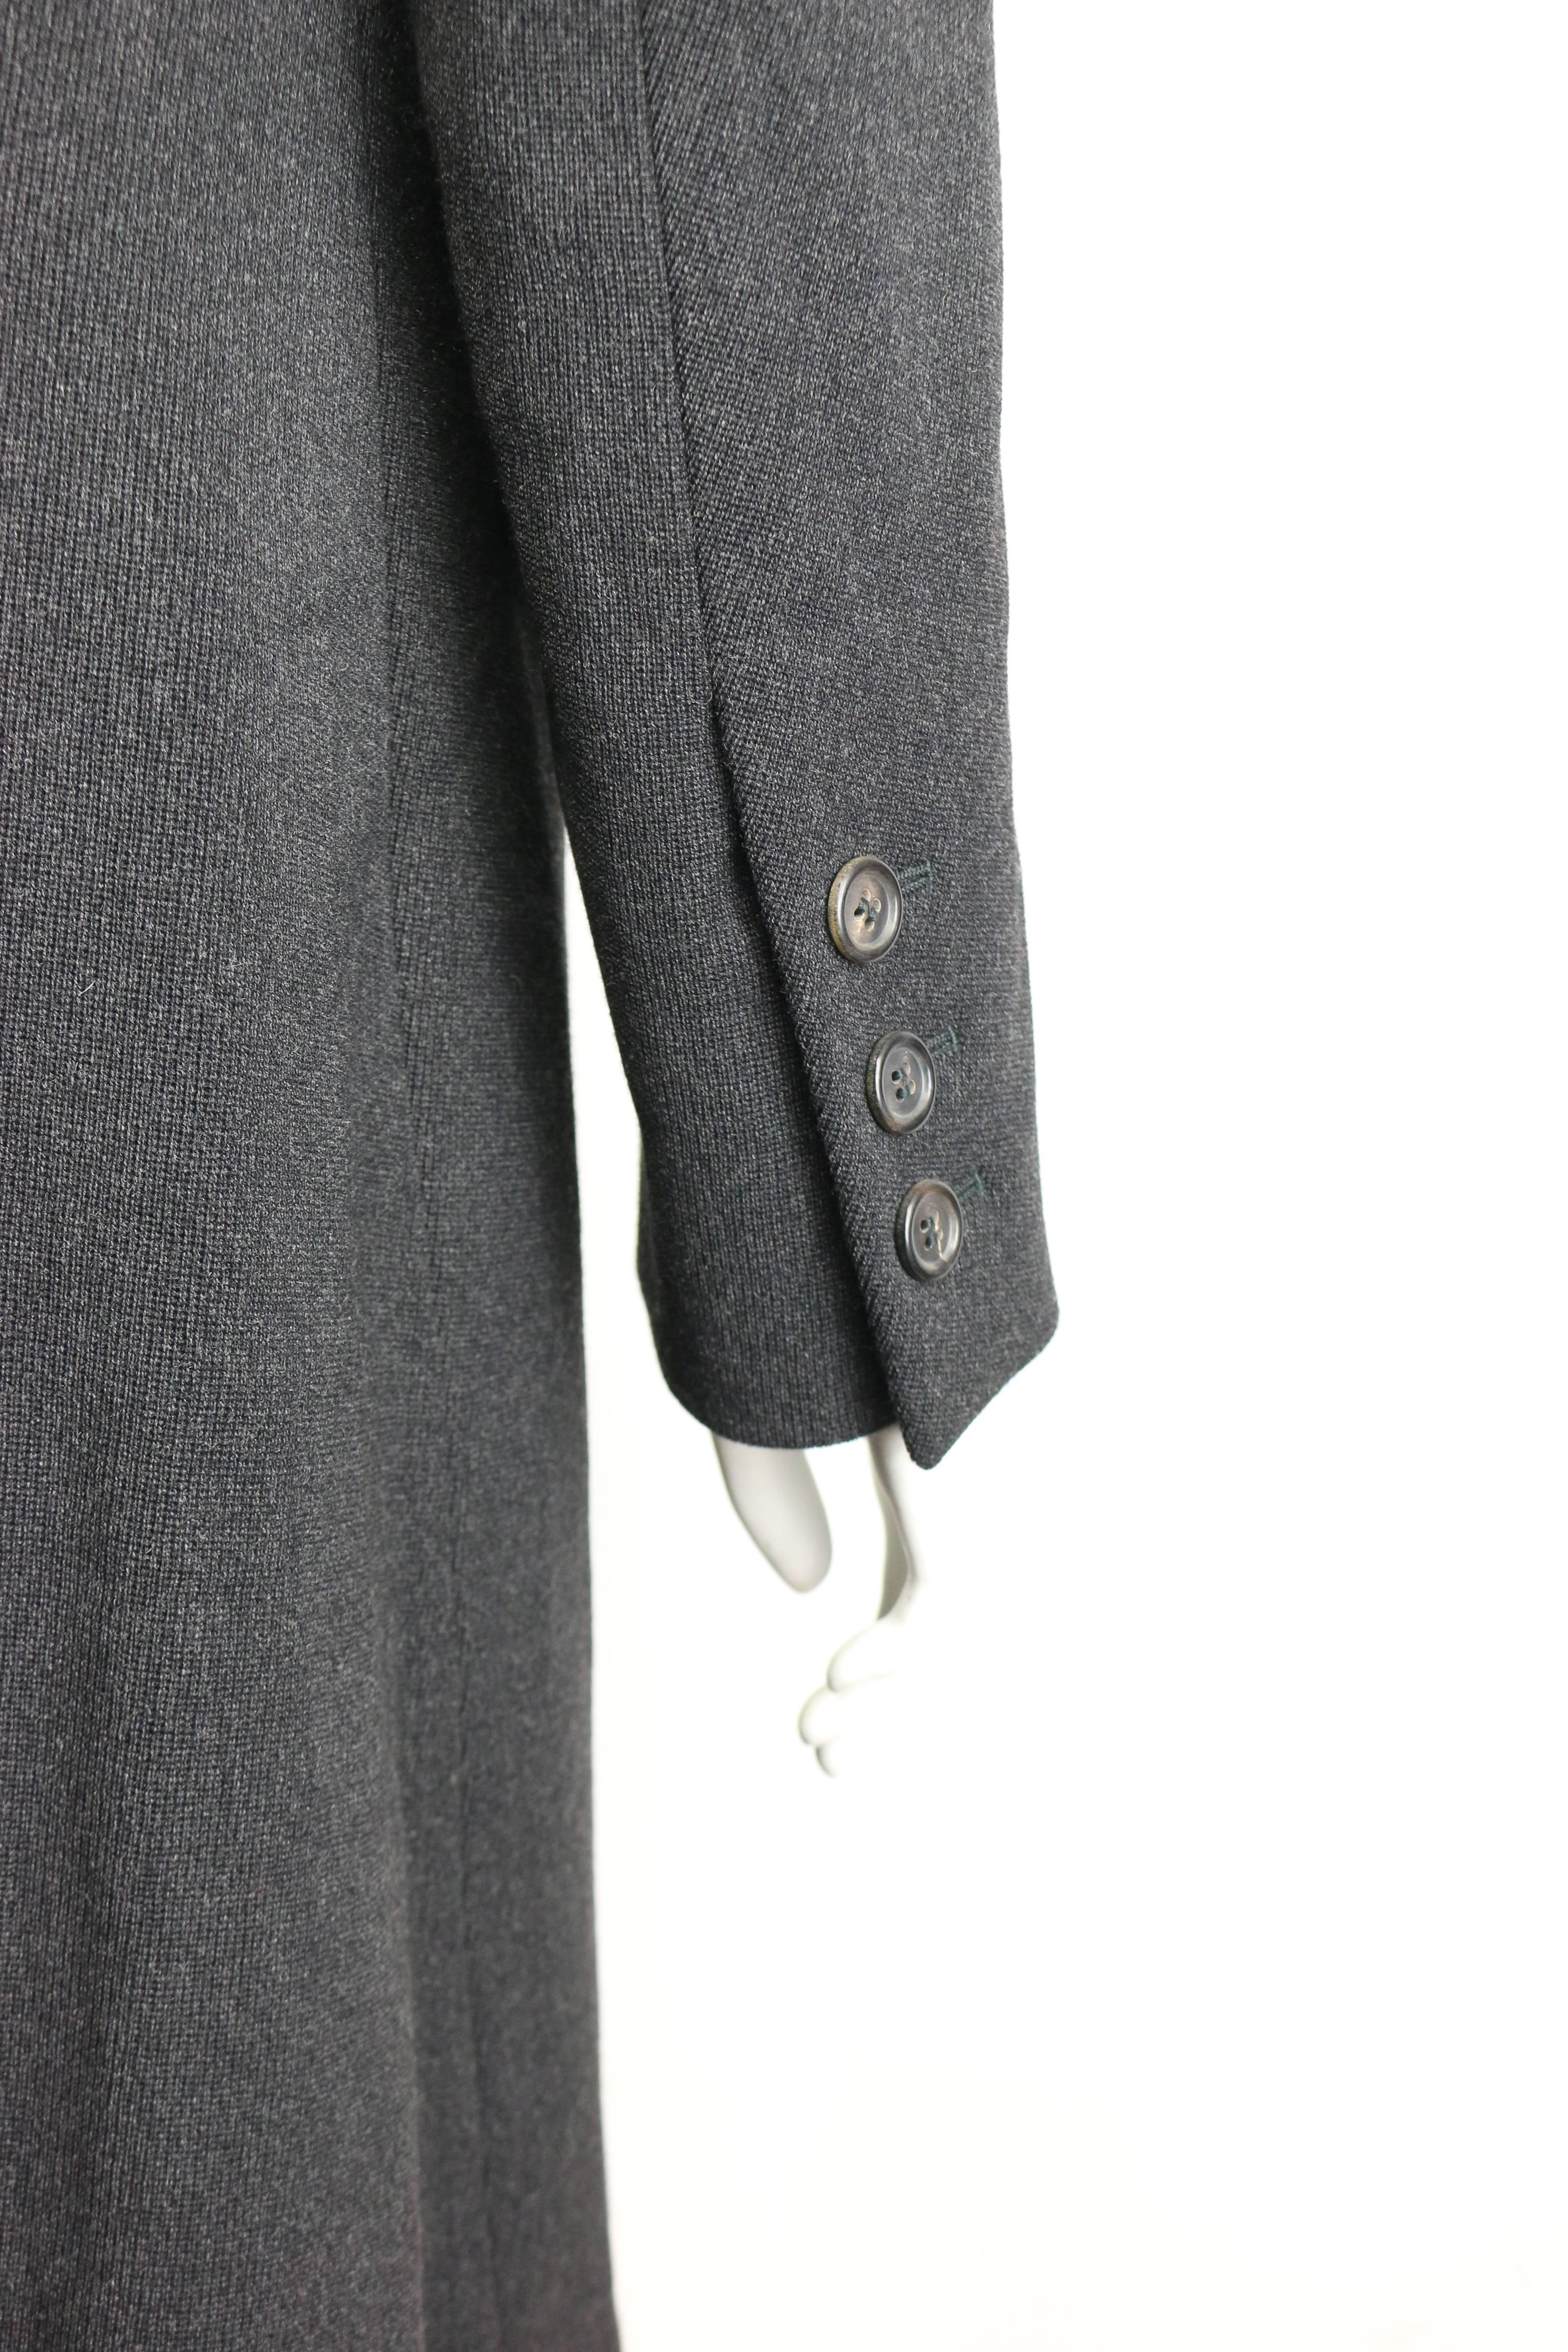 Black Prada Grey Wool Double Breasted Long Coat